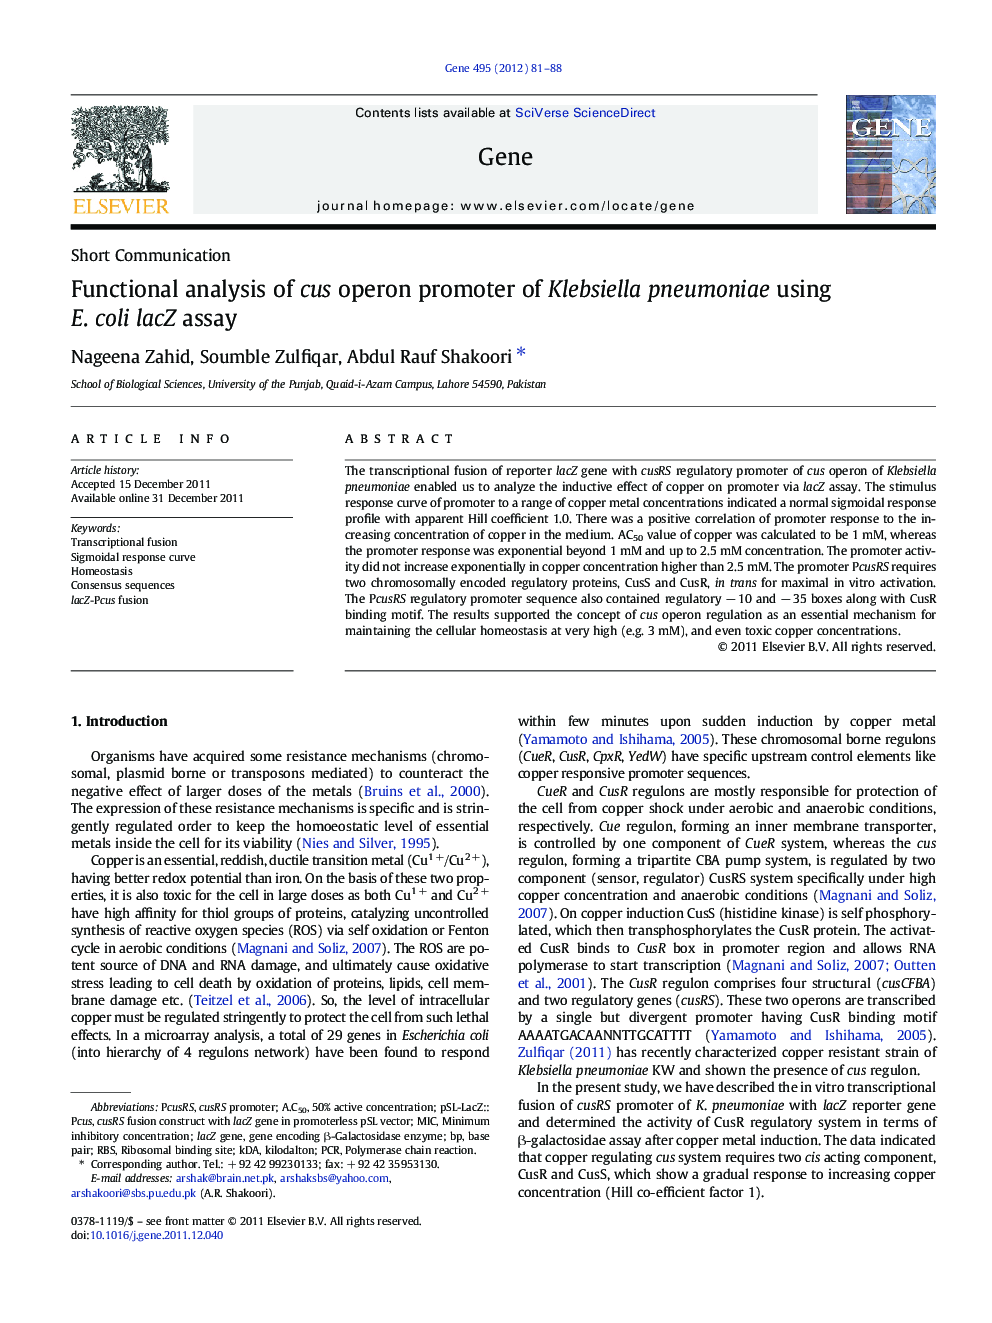 Functional analysis of cus operon promoter of Klebsiella pneumoniae using E. coli lacZ assay